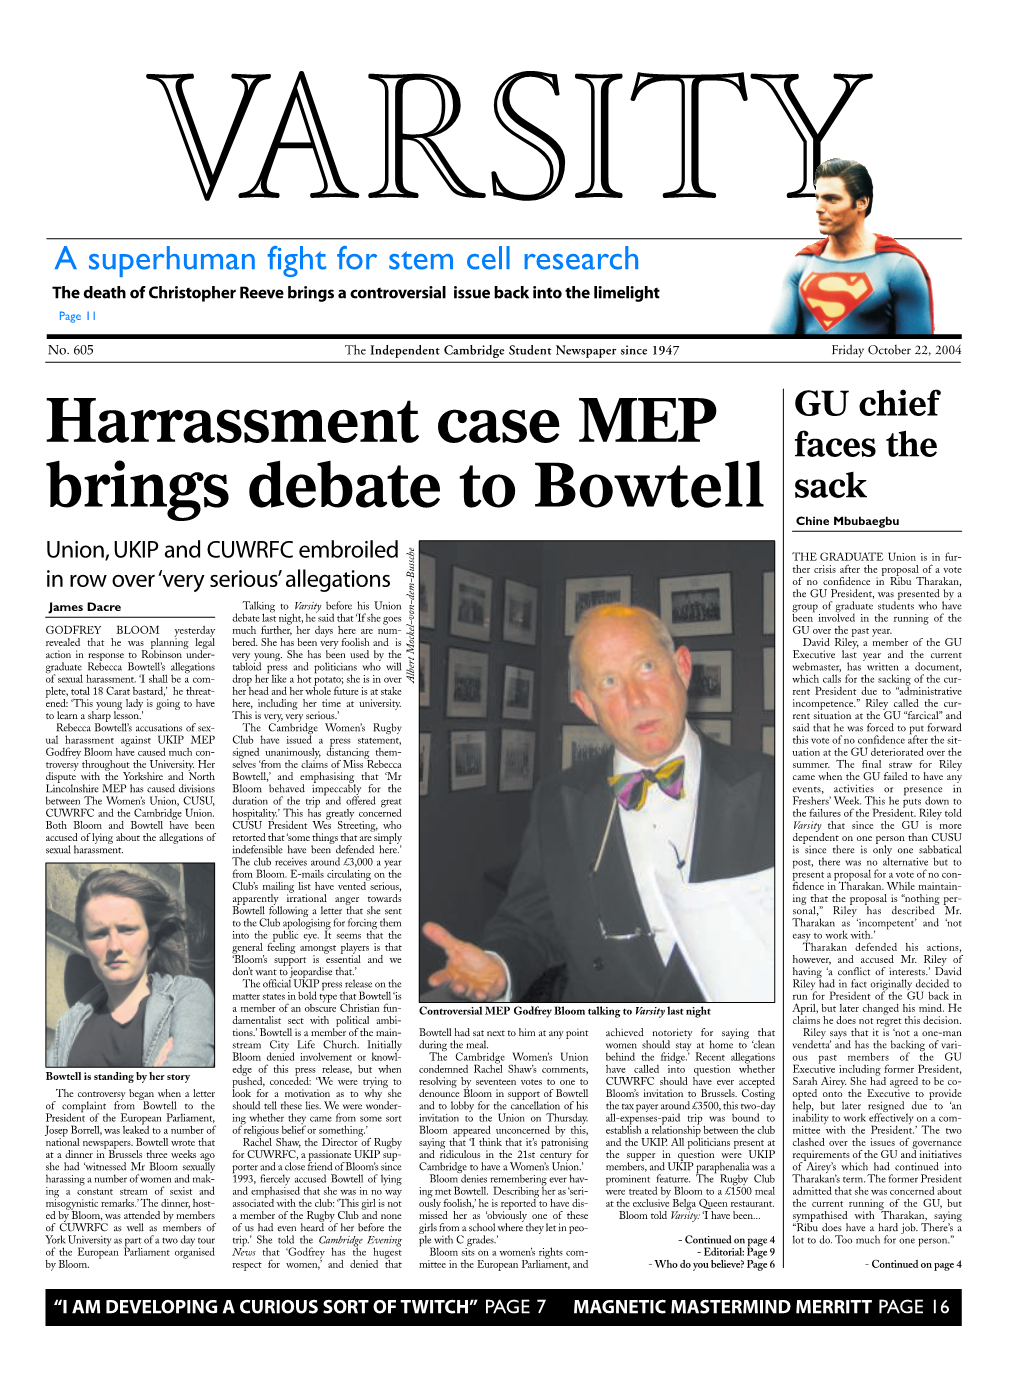 Harrassment Case MEP Brings Debate to Bowtell